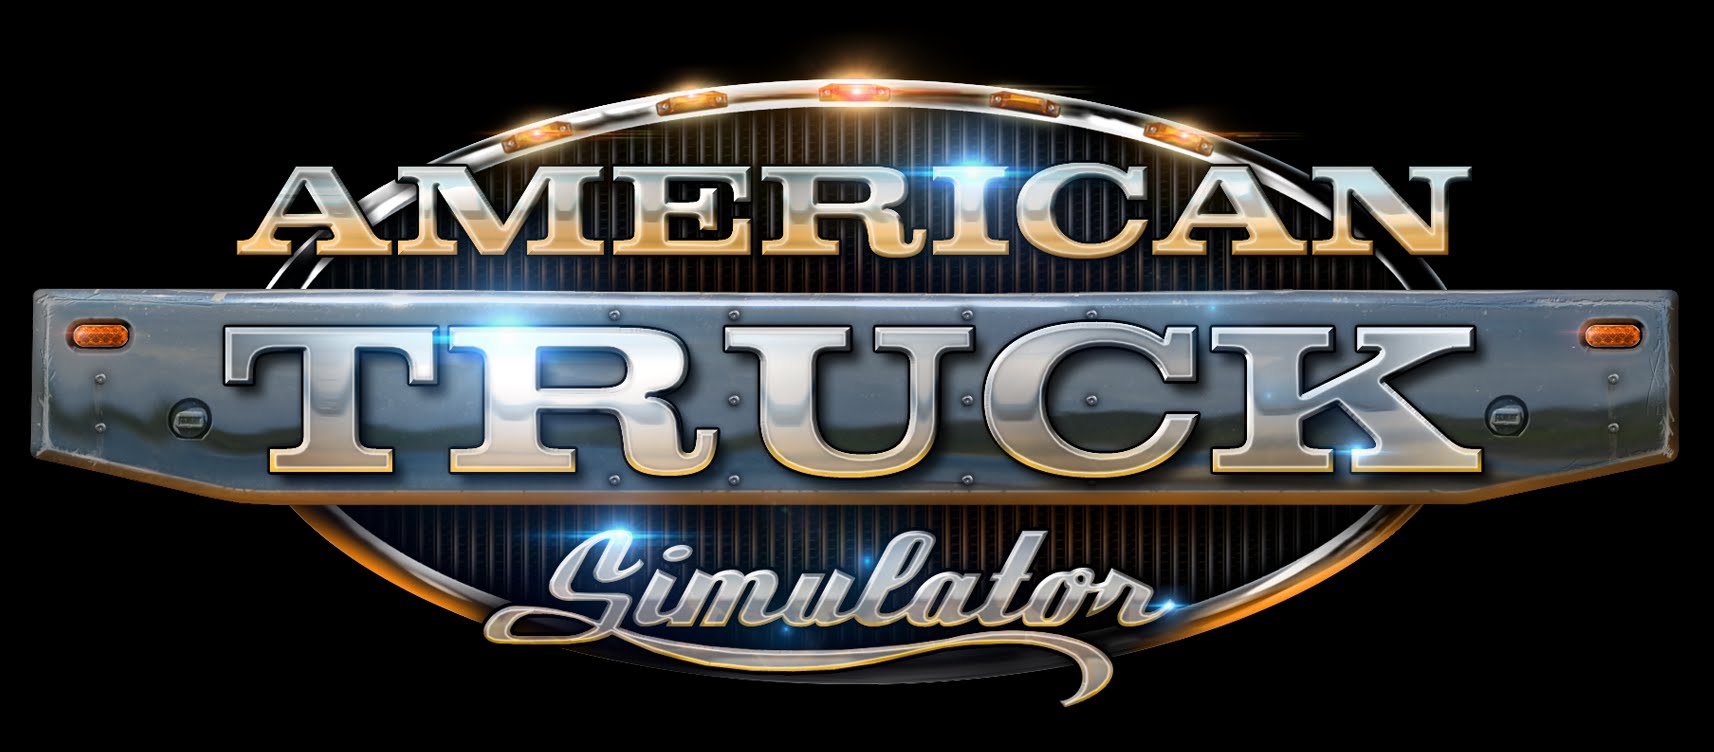  american truck simulator logo  png 20 free Cliparts 